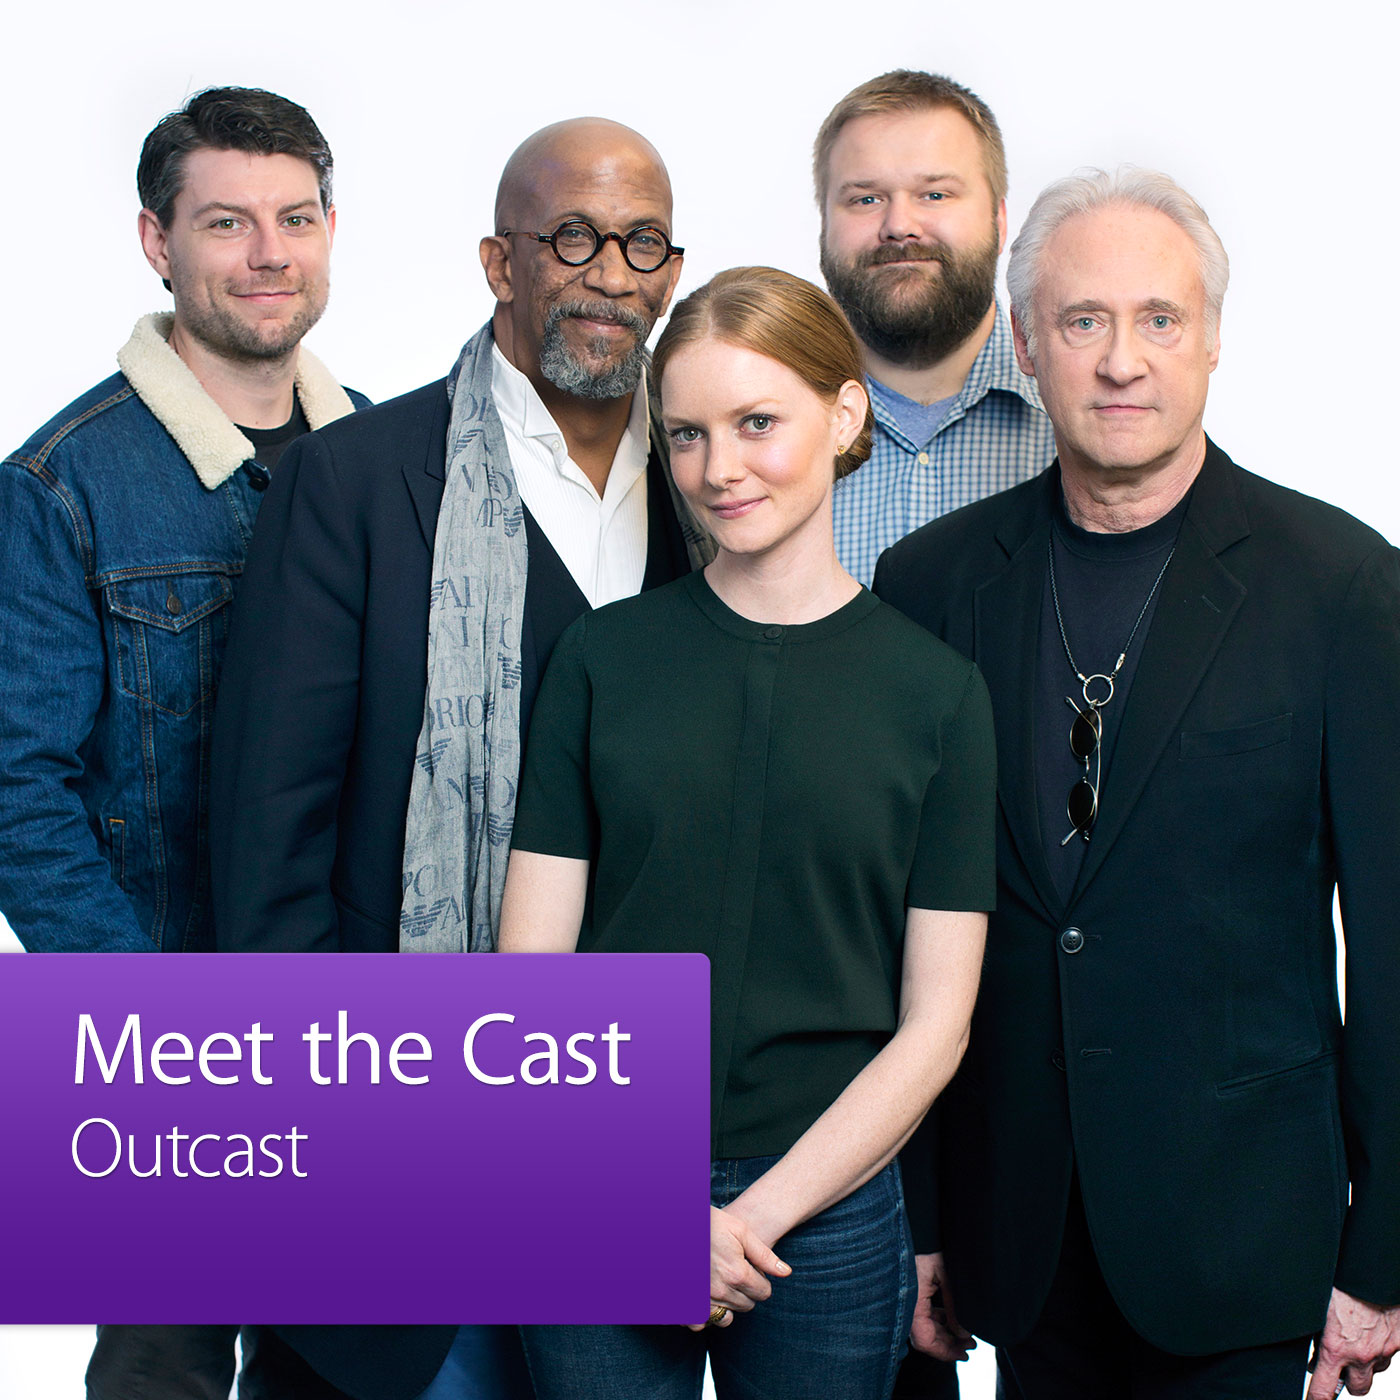 Outcast: Meet the Cast